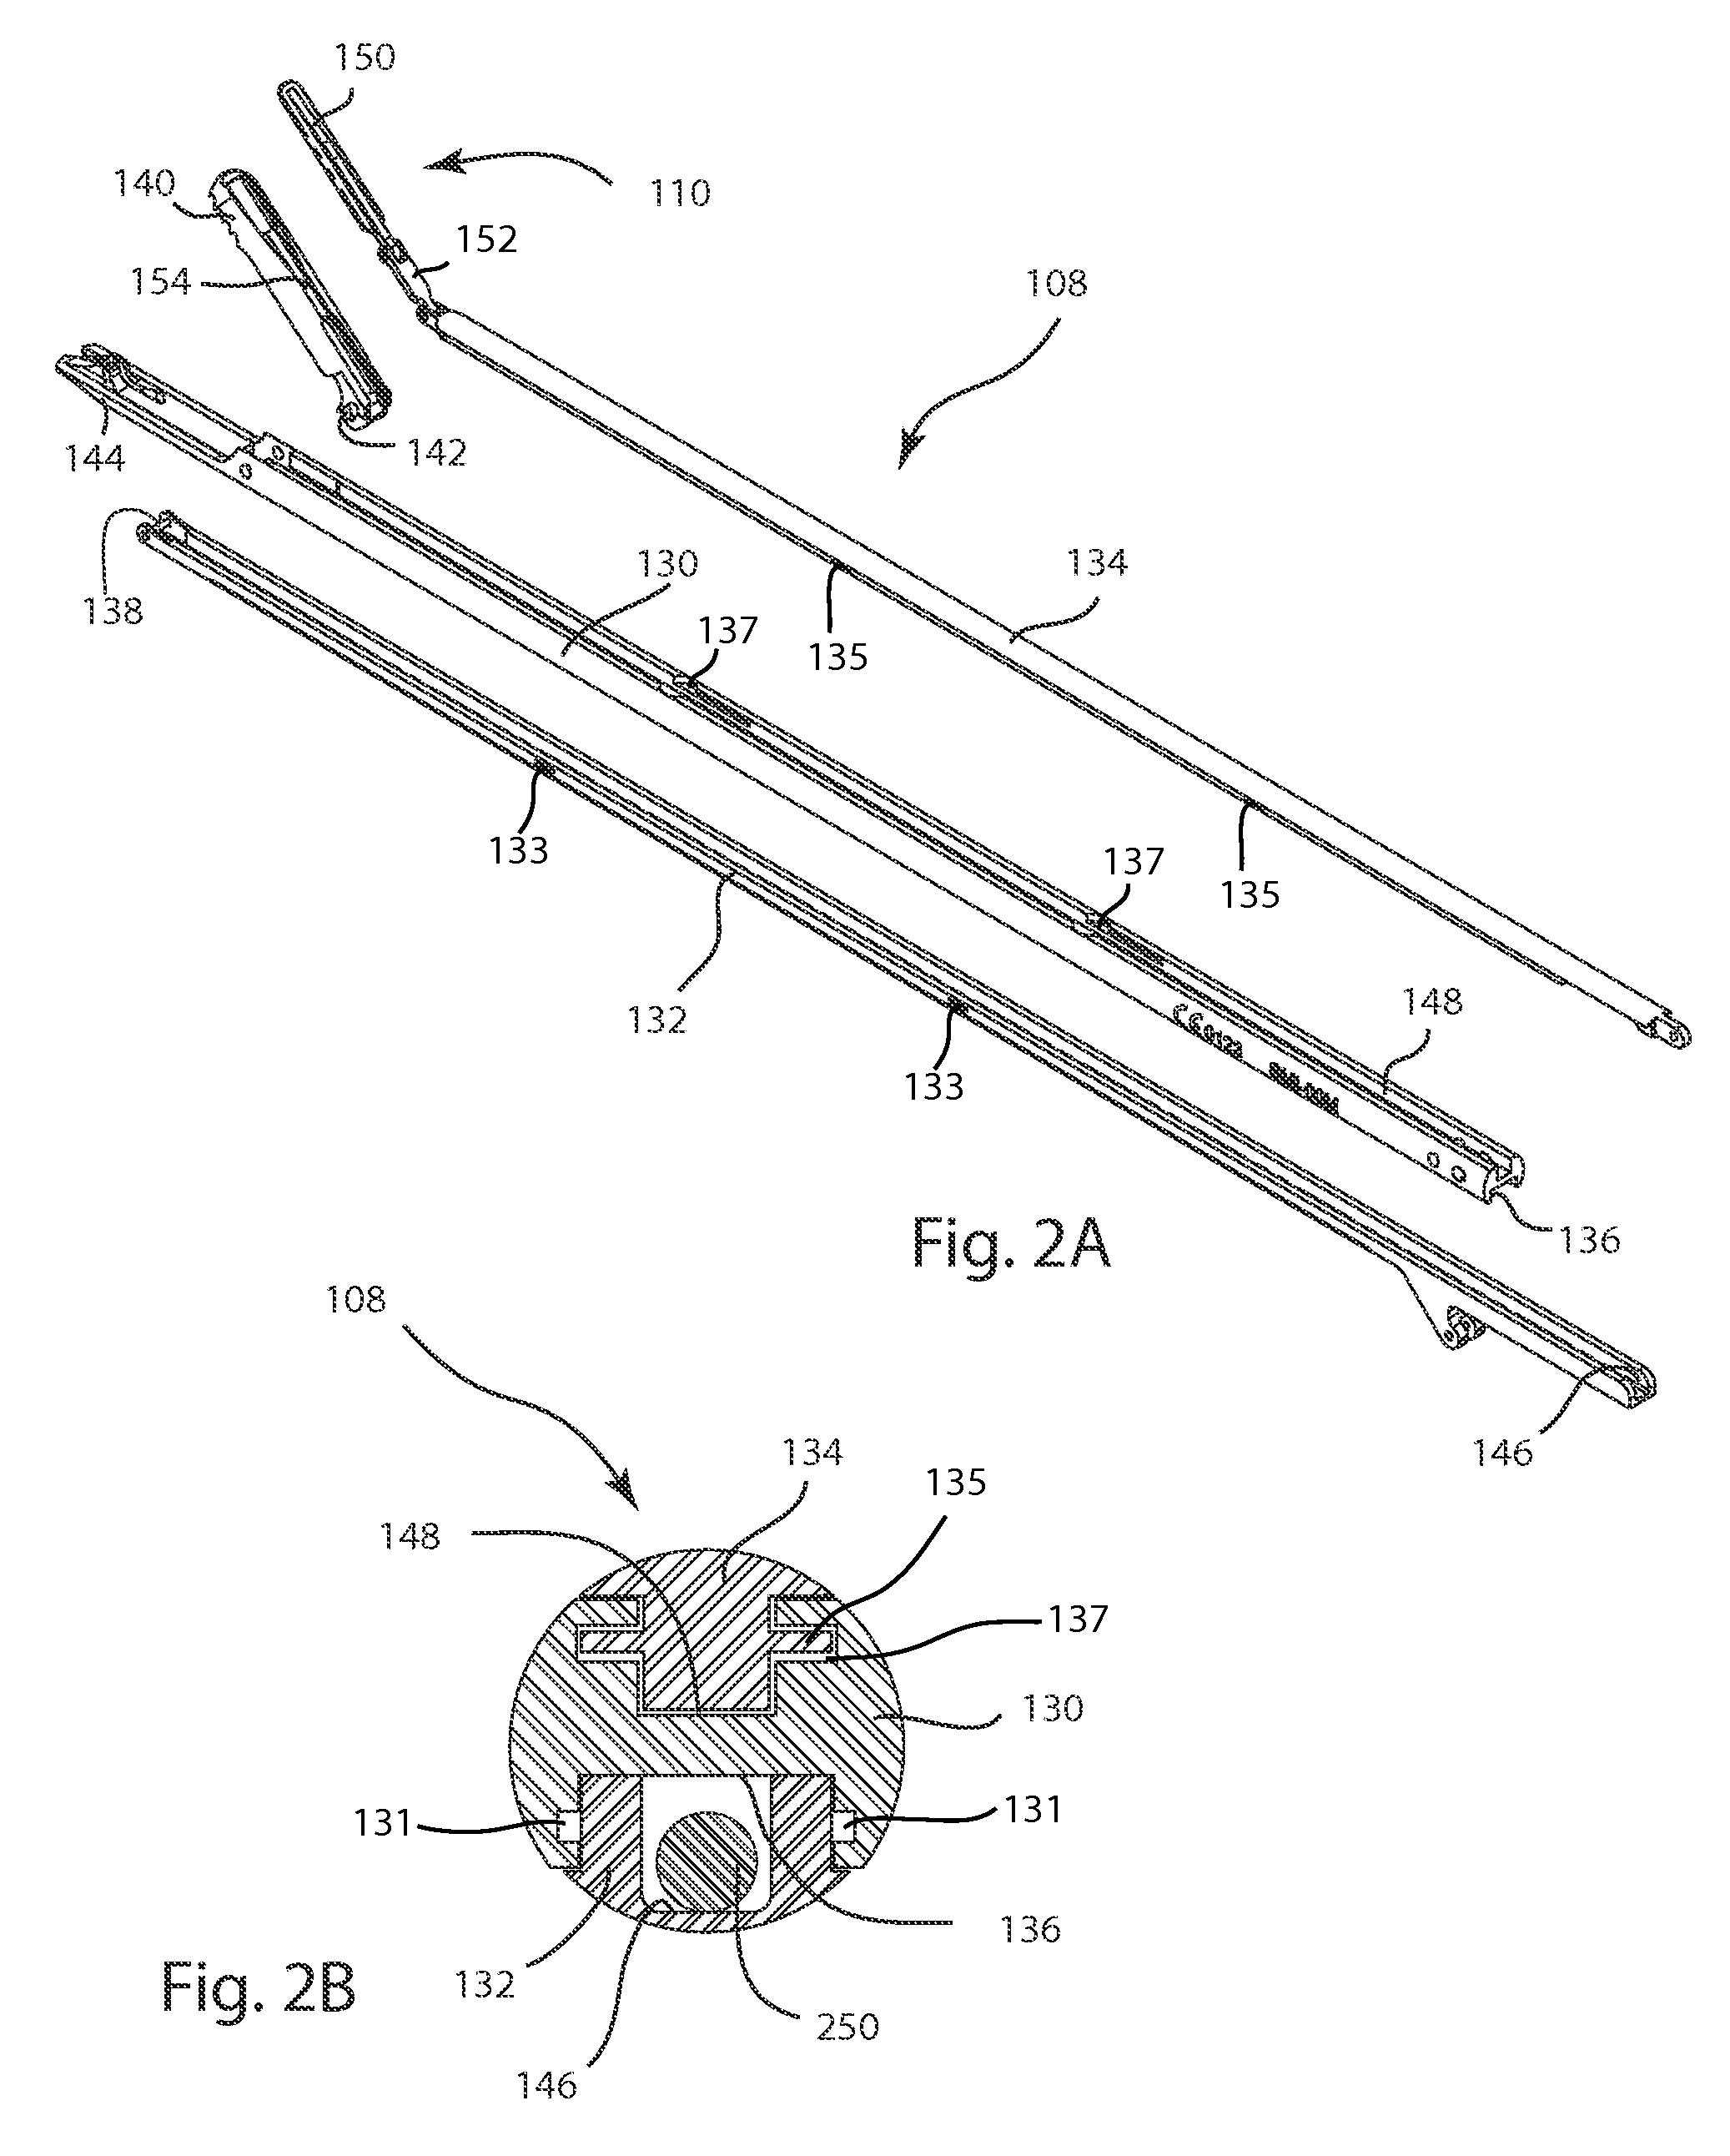 Suture passing apparatus and method